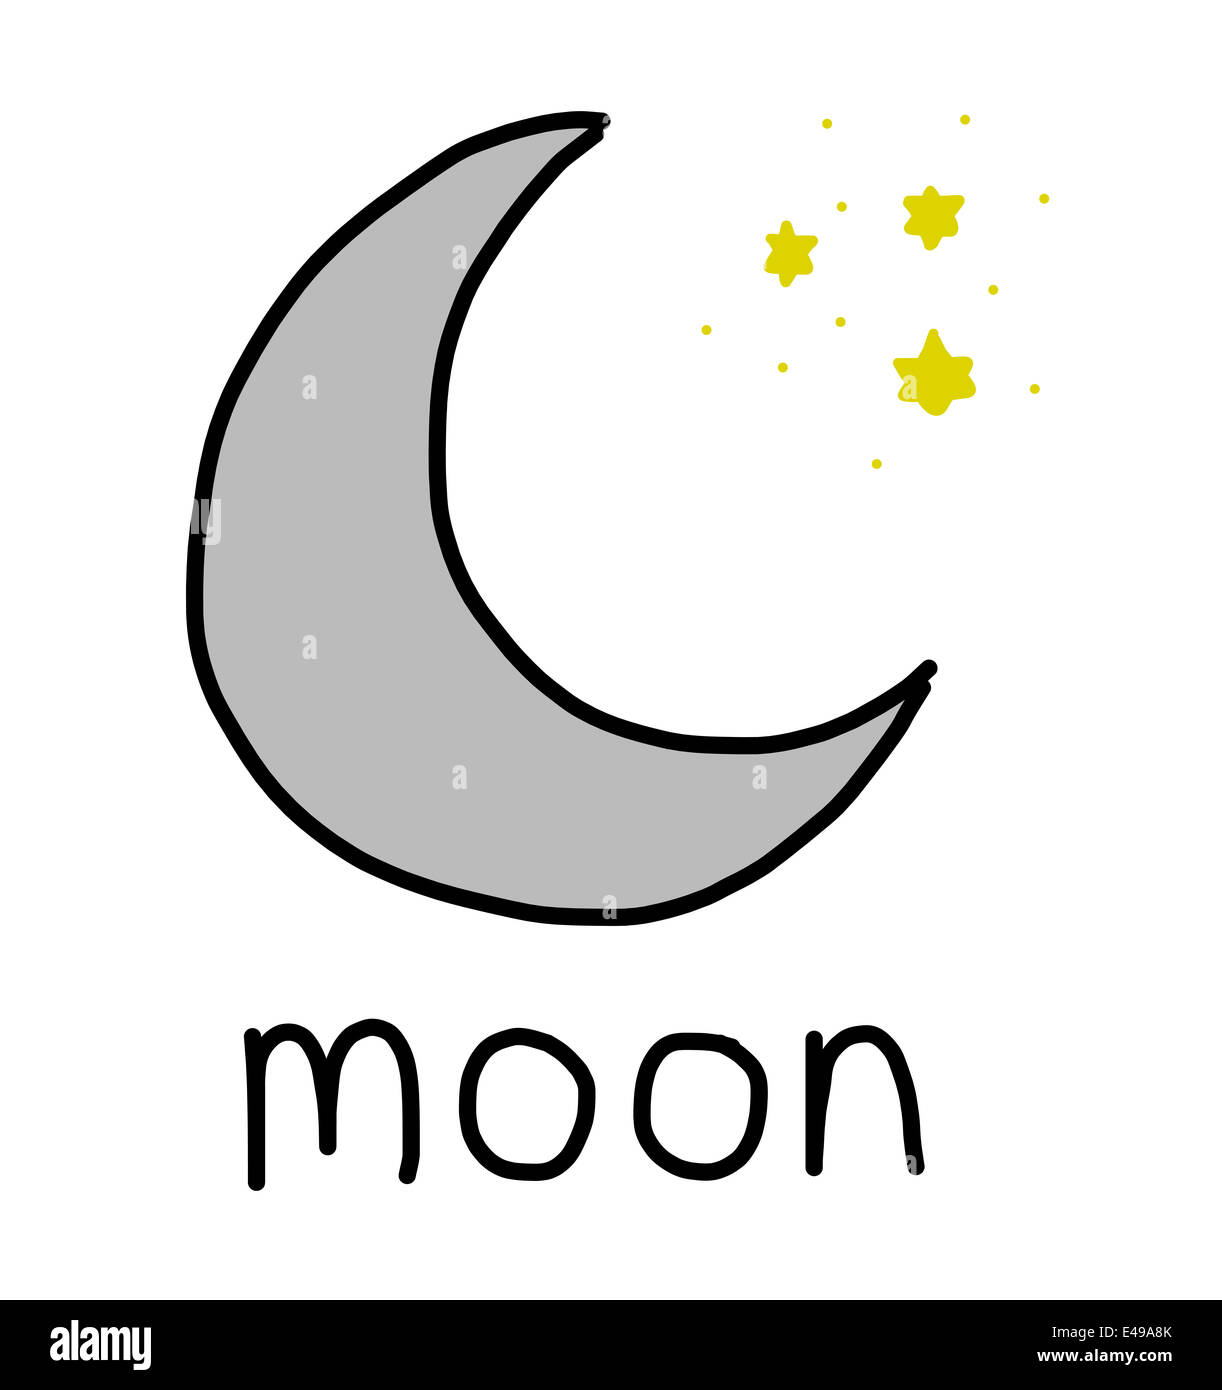 Анализ слова луна. Луна для ворда. Слово Луна. Космос буква с Луна. Слово Луна большими буквами.